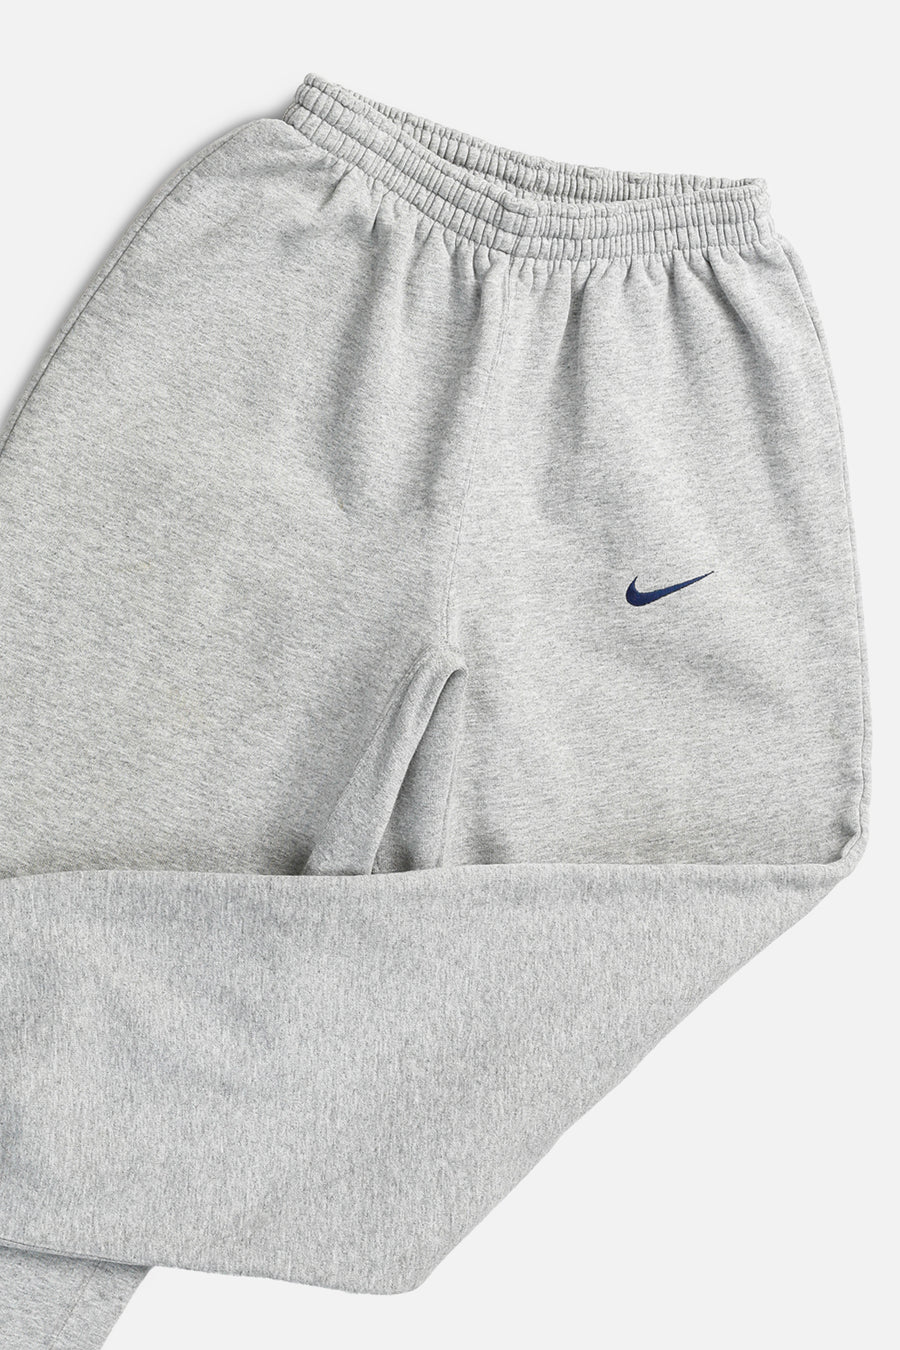 Vintage Nike Sweatpants - M